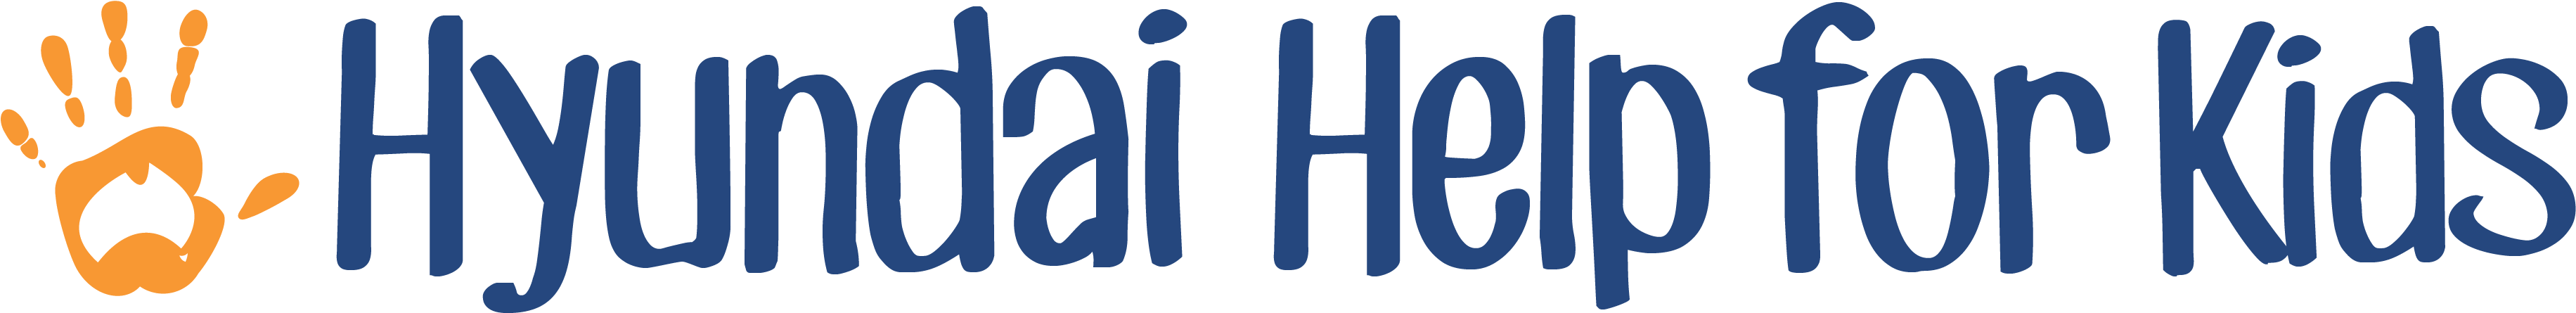 Hyundai Help For Kids - Hyundai Helps For Kids Logo (4213x900), Png Download